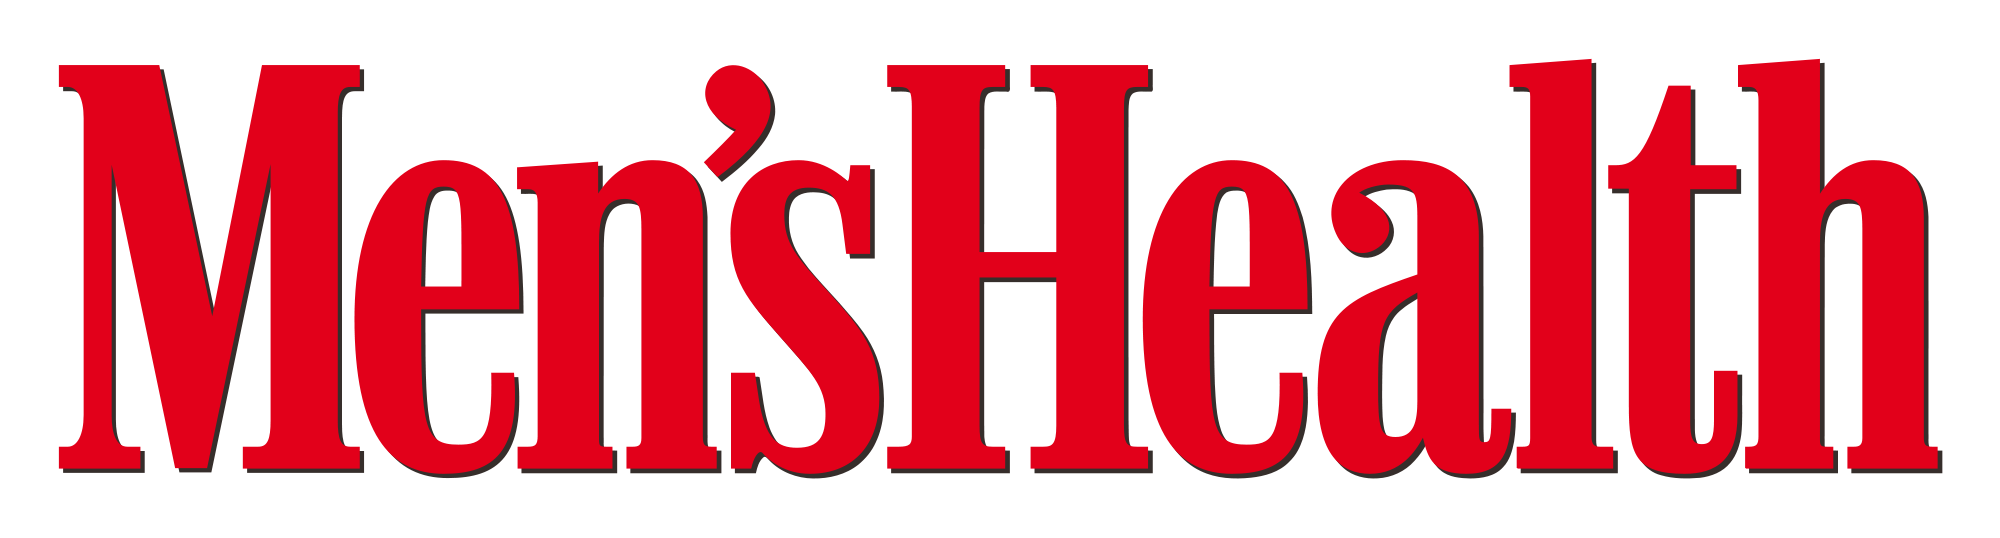 Men's_Health logo.png